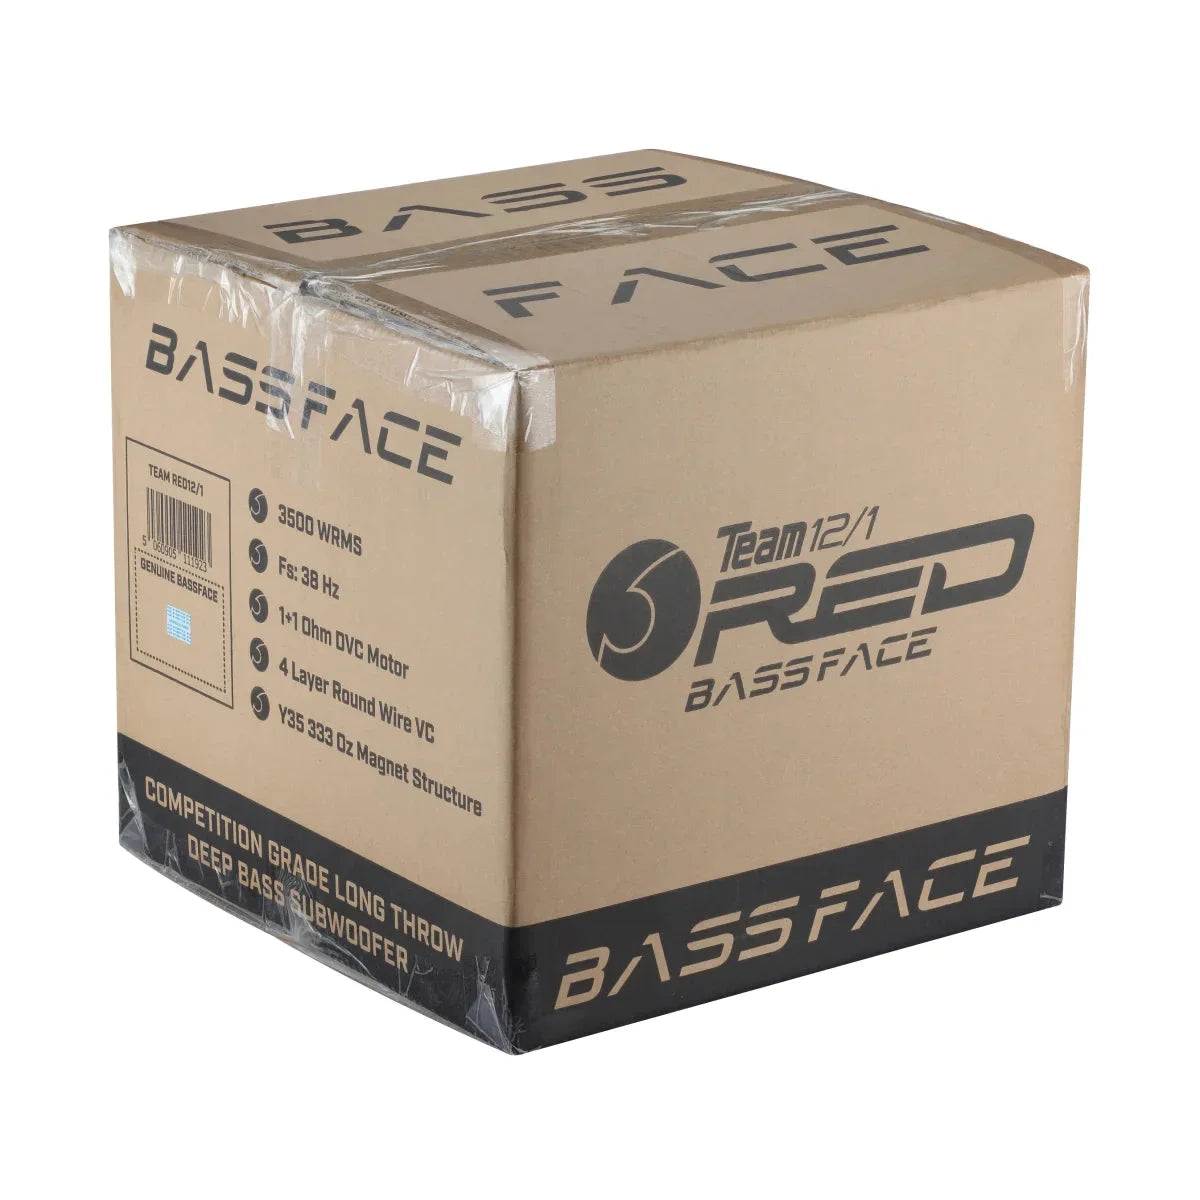 Bassface-Team RED 12-12" (30cm) Subwoofer-Masori.de